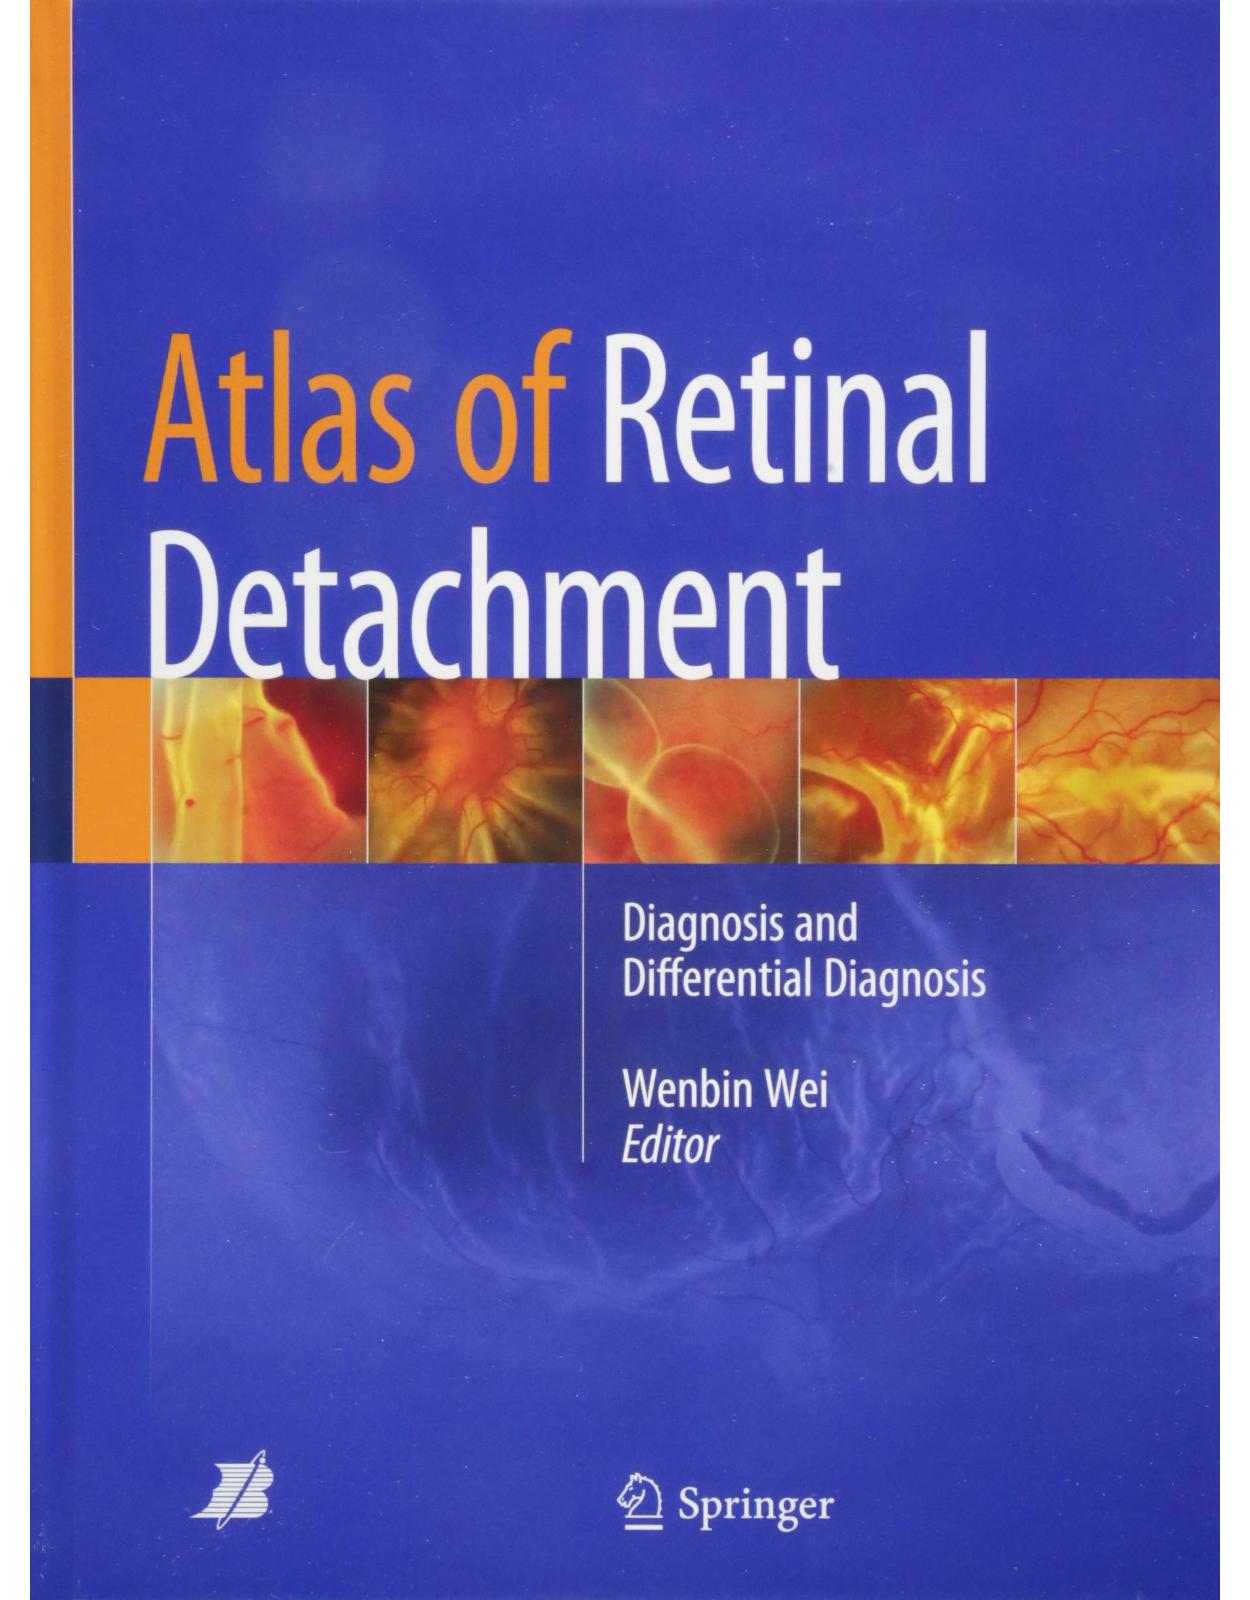 Atlas of Retinal Detachment: Diagnosis and Differential Diagnosis